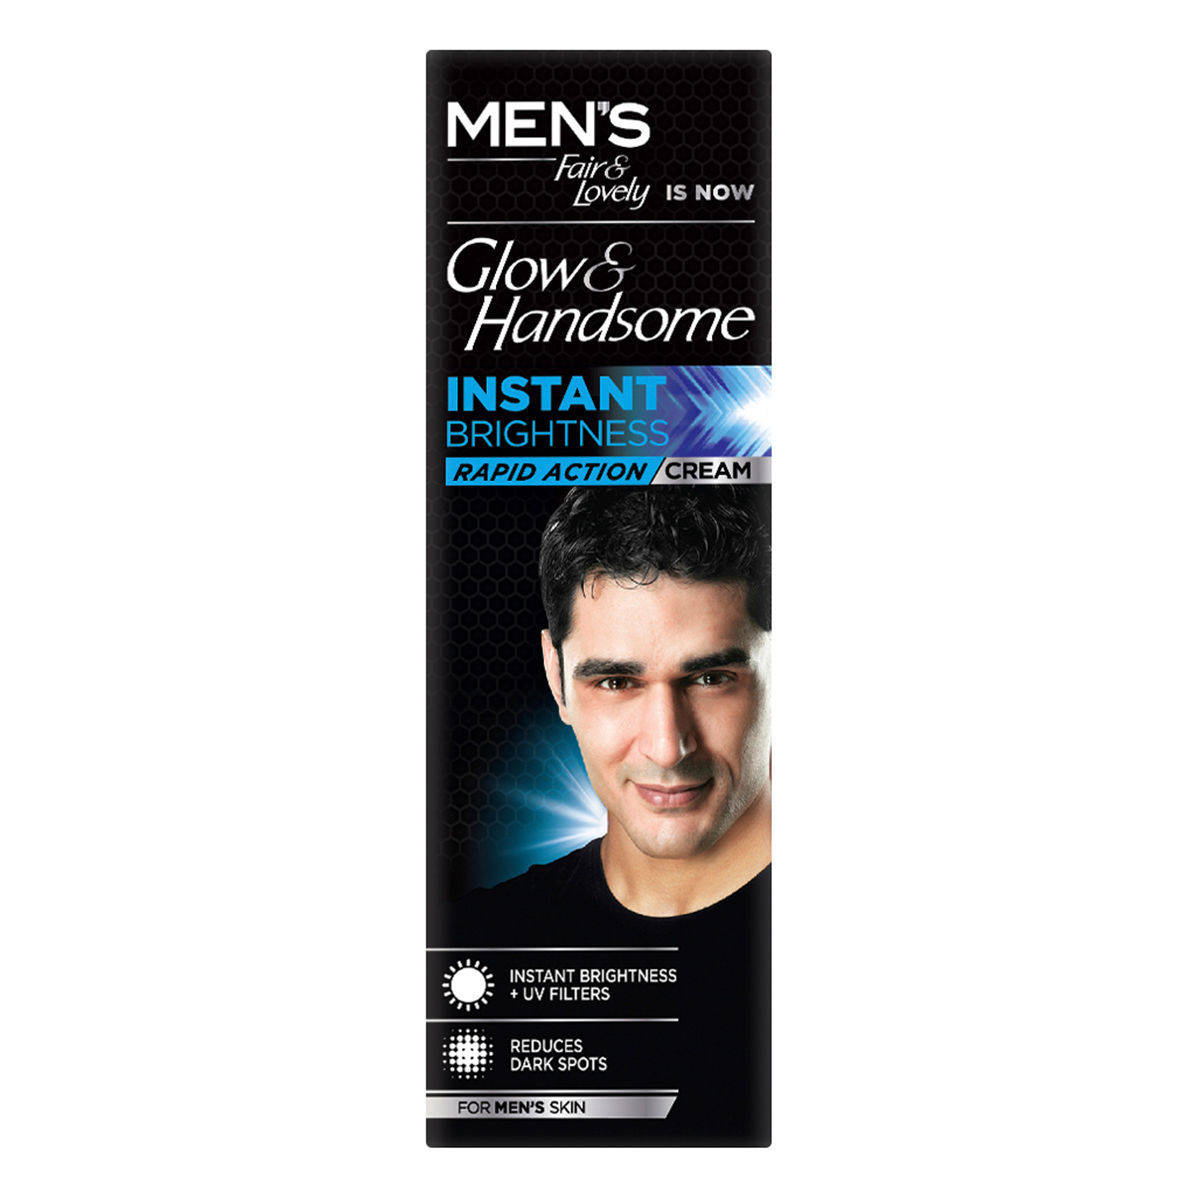 Buy Glow & Handsome Instant Brightness Cream for Men, 50 gm Online